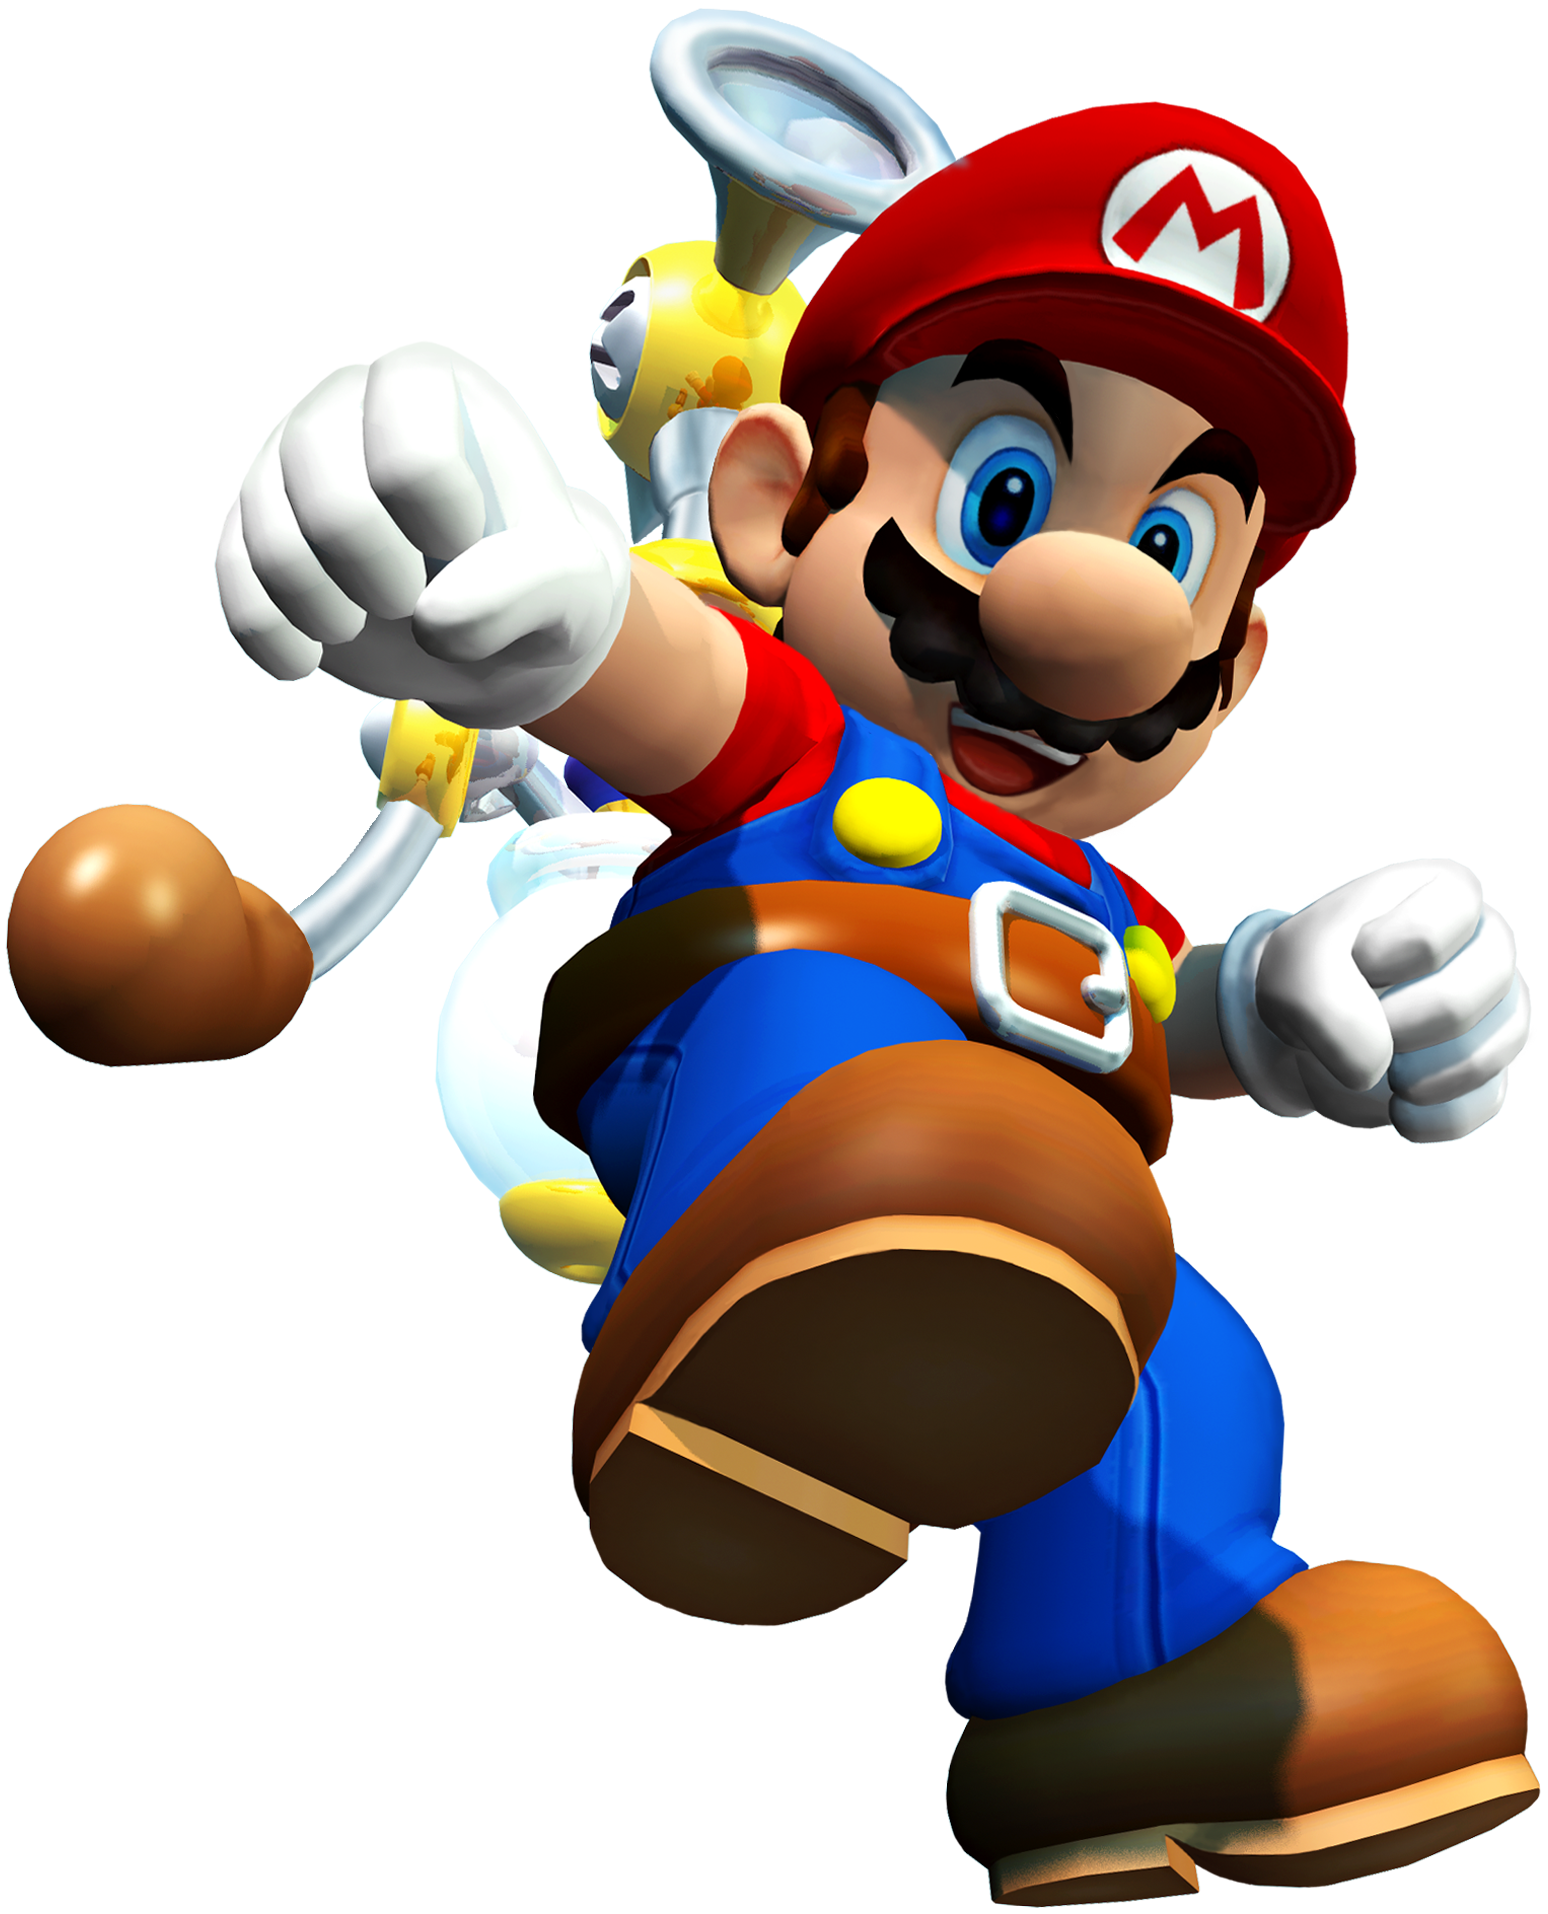 Mario bros 5. Супер Марио. Марио супер Марио. Супер Марио БРОС 64. Марио из супер Марио БРОС.